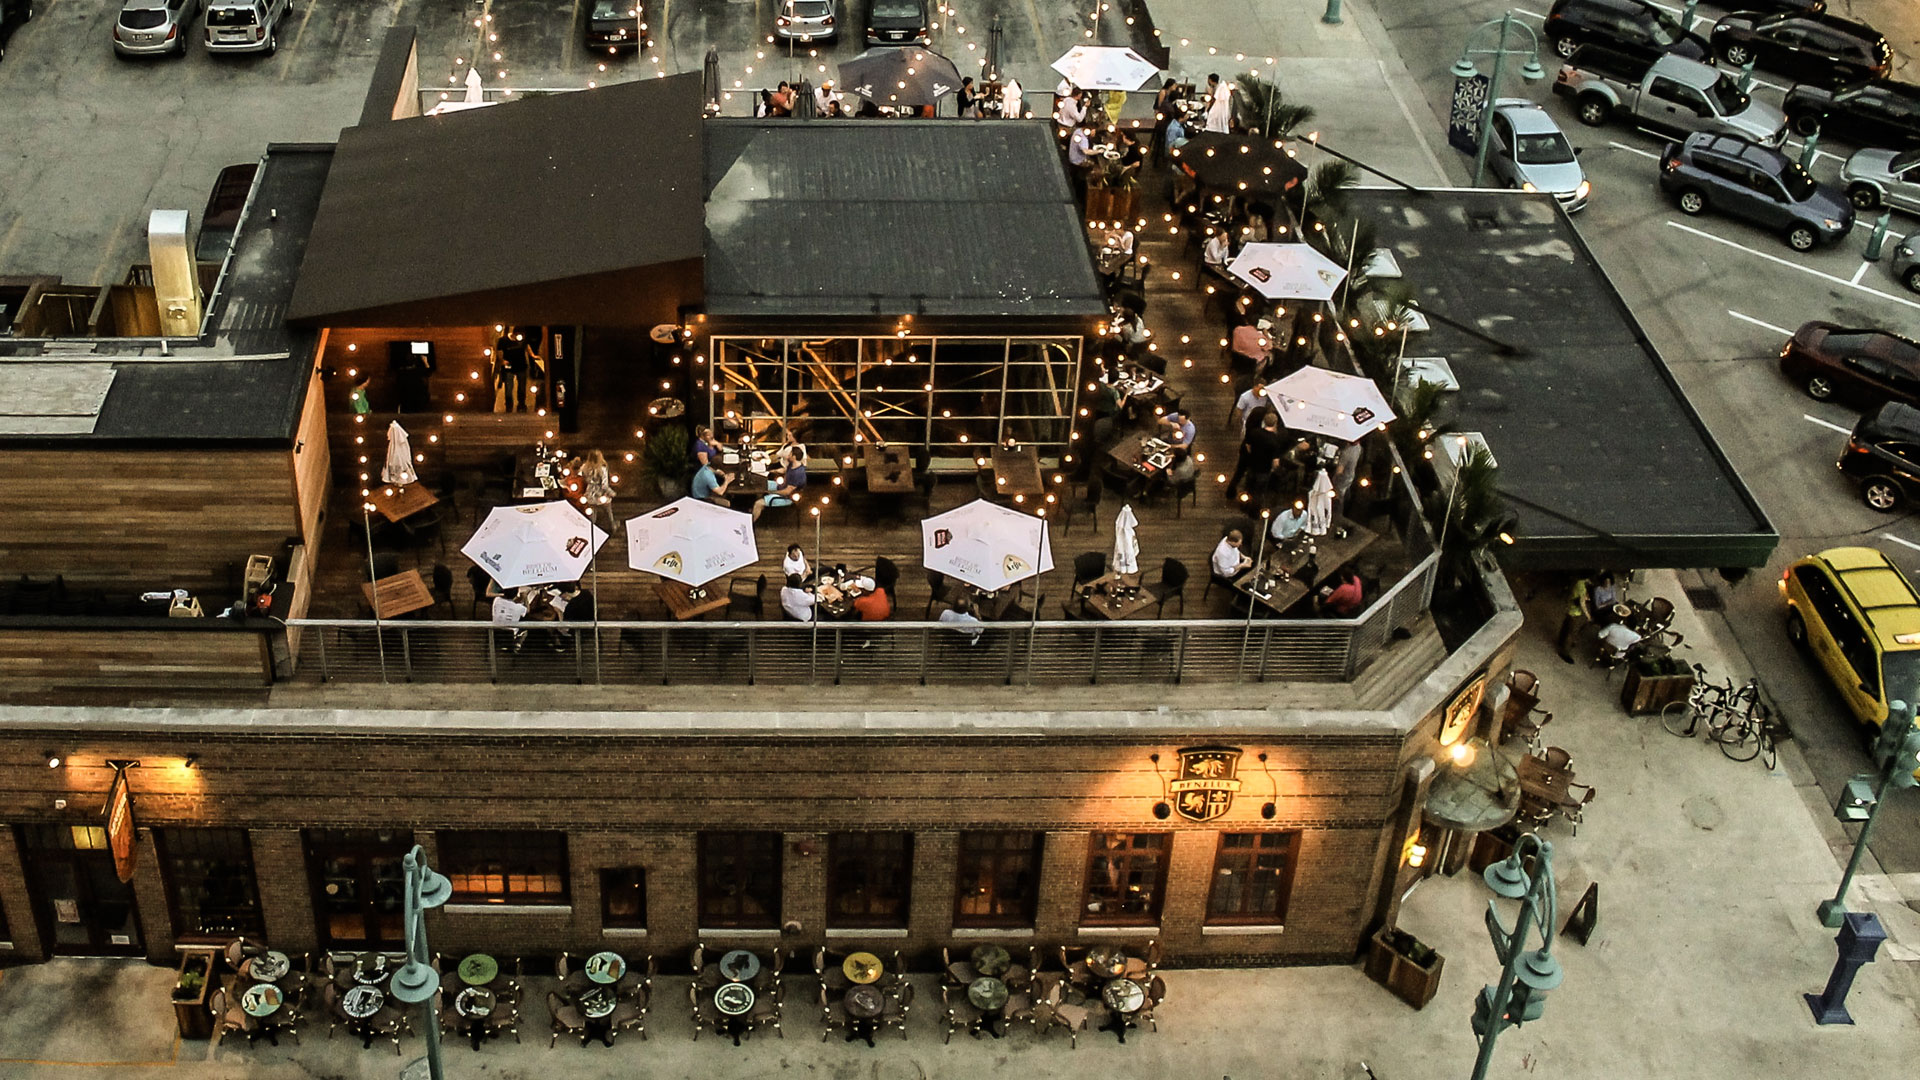 Drone photo of Café Benelux's rooftop patio